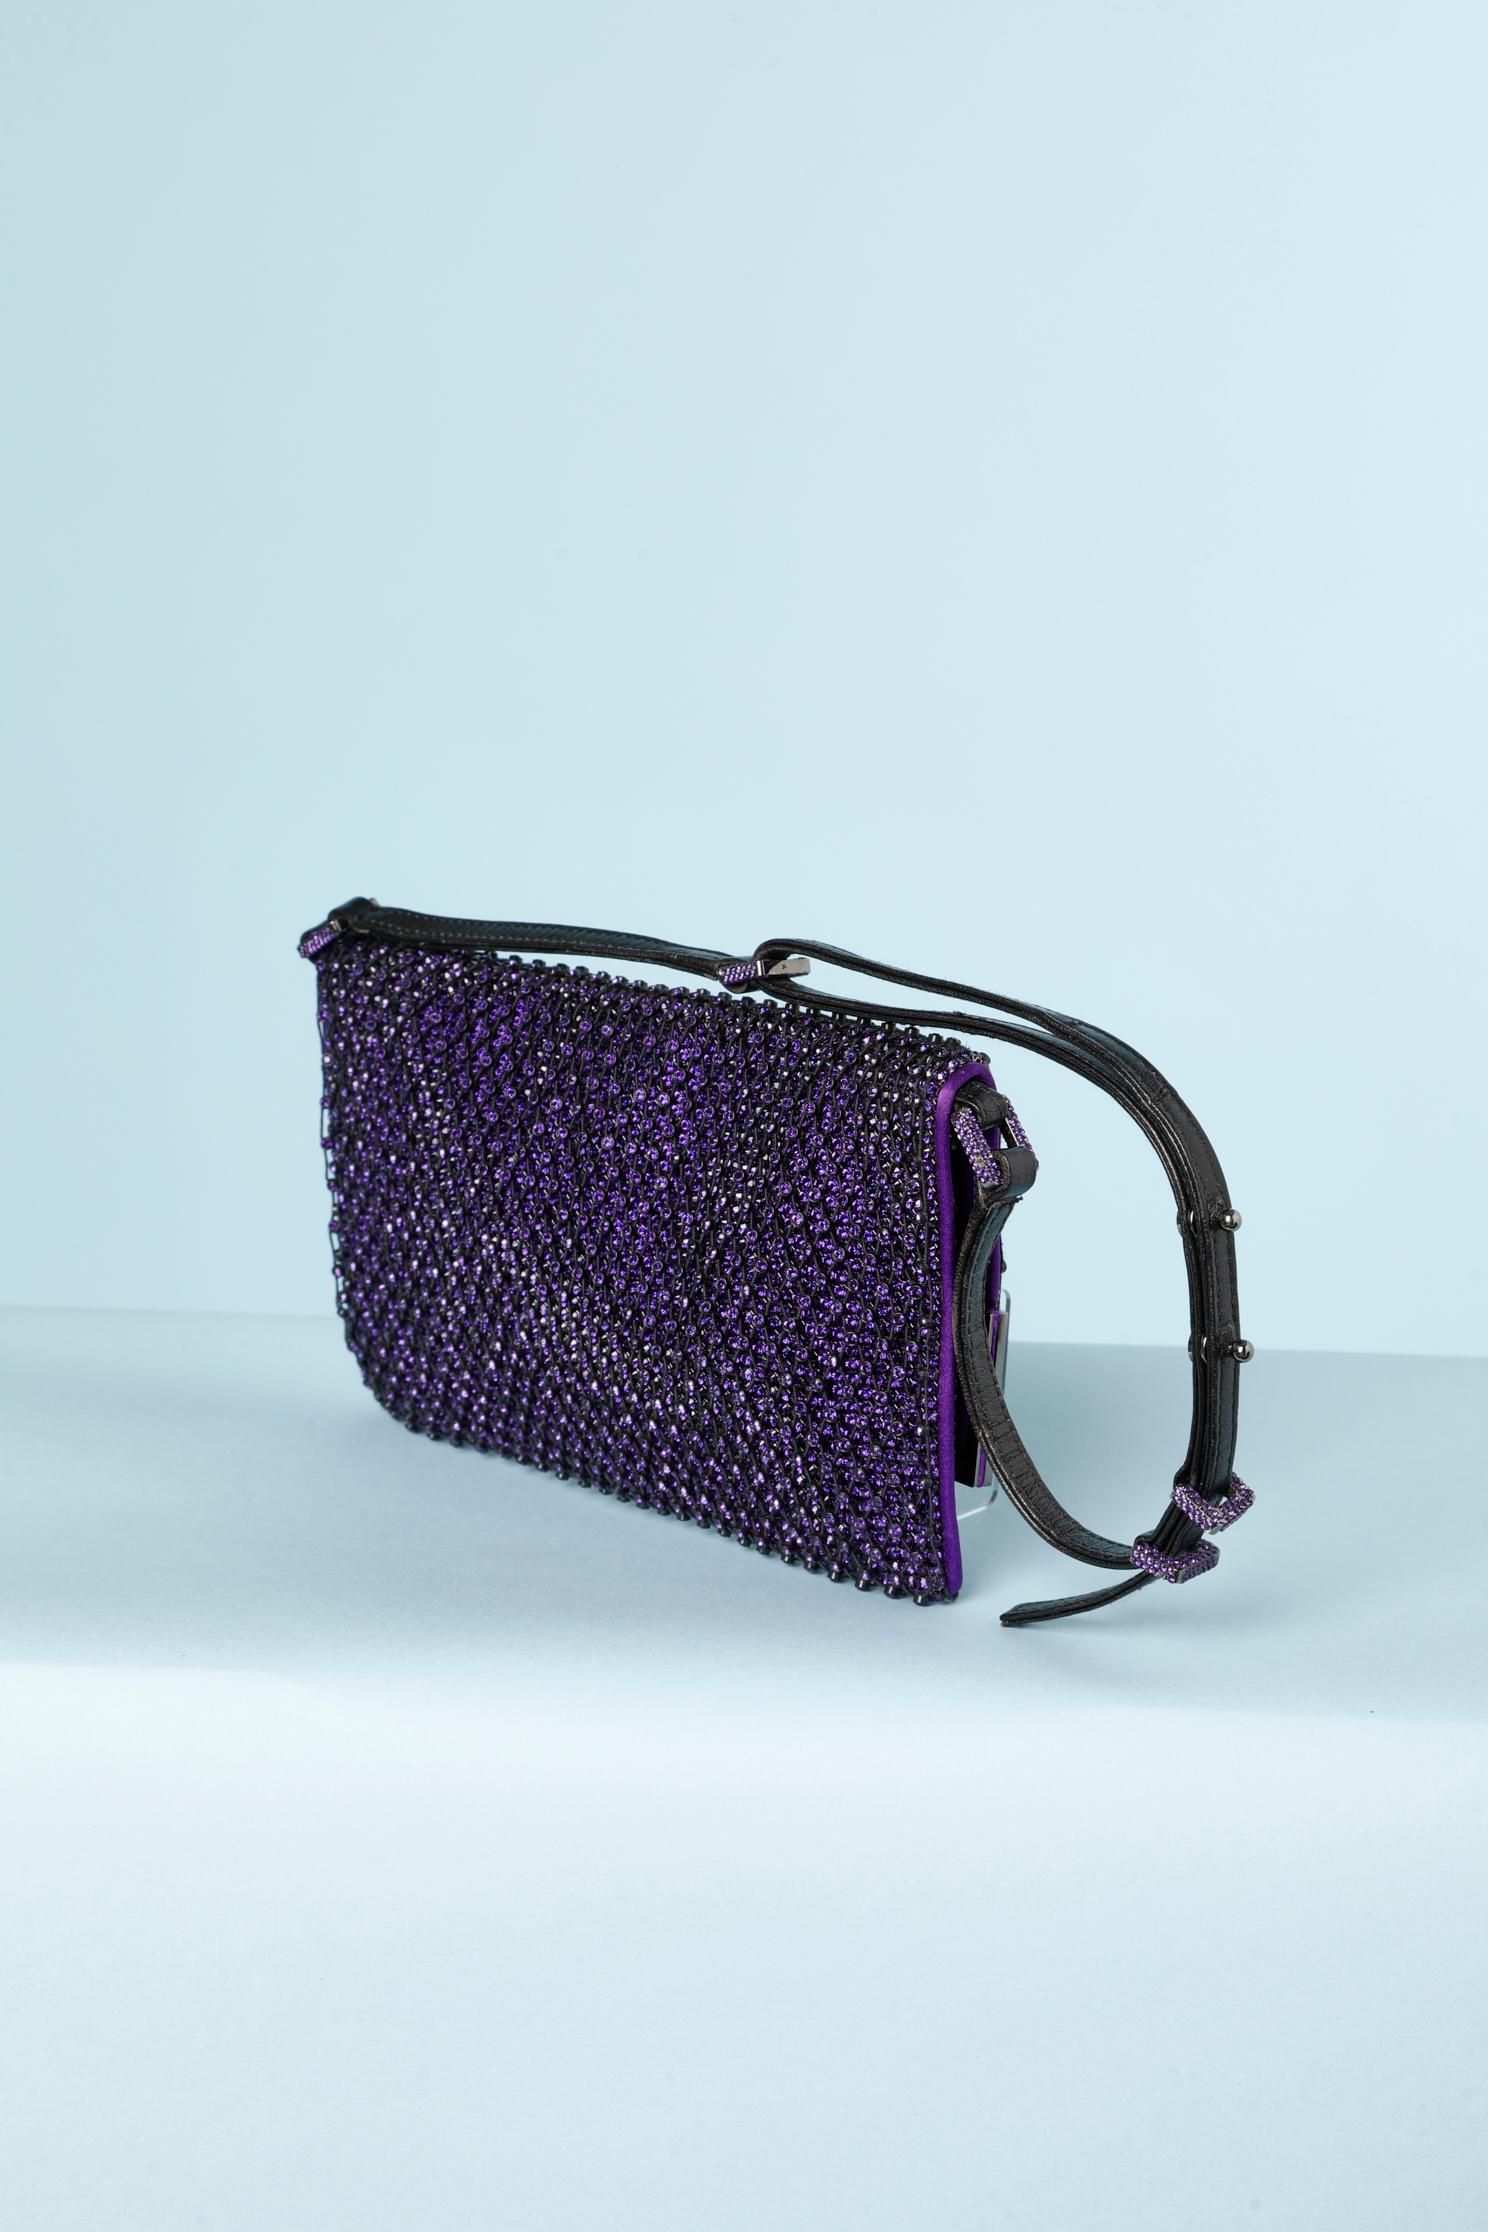 Evening clutch in purple rhinestone net and purple rhinestone and leather strap 
Size : 18cm X 12 cm X 1 cm